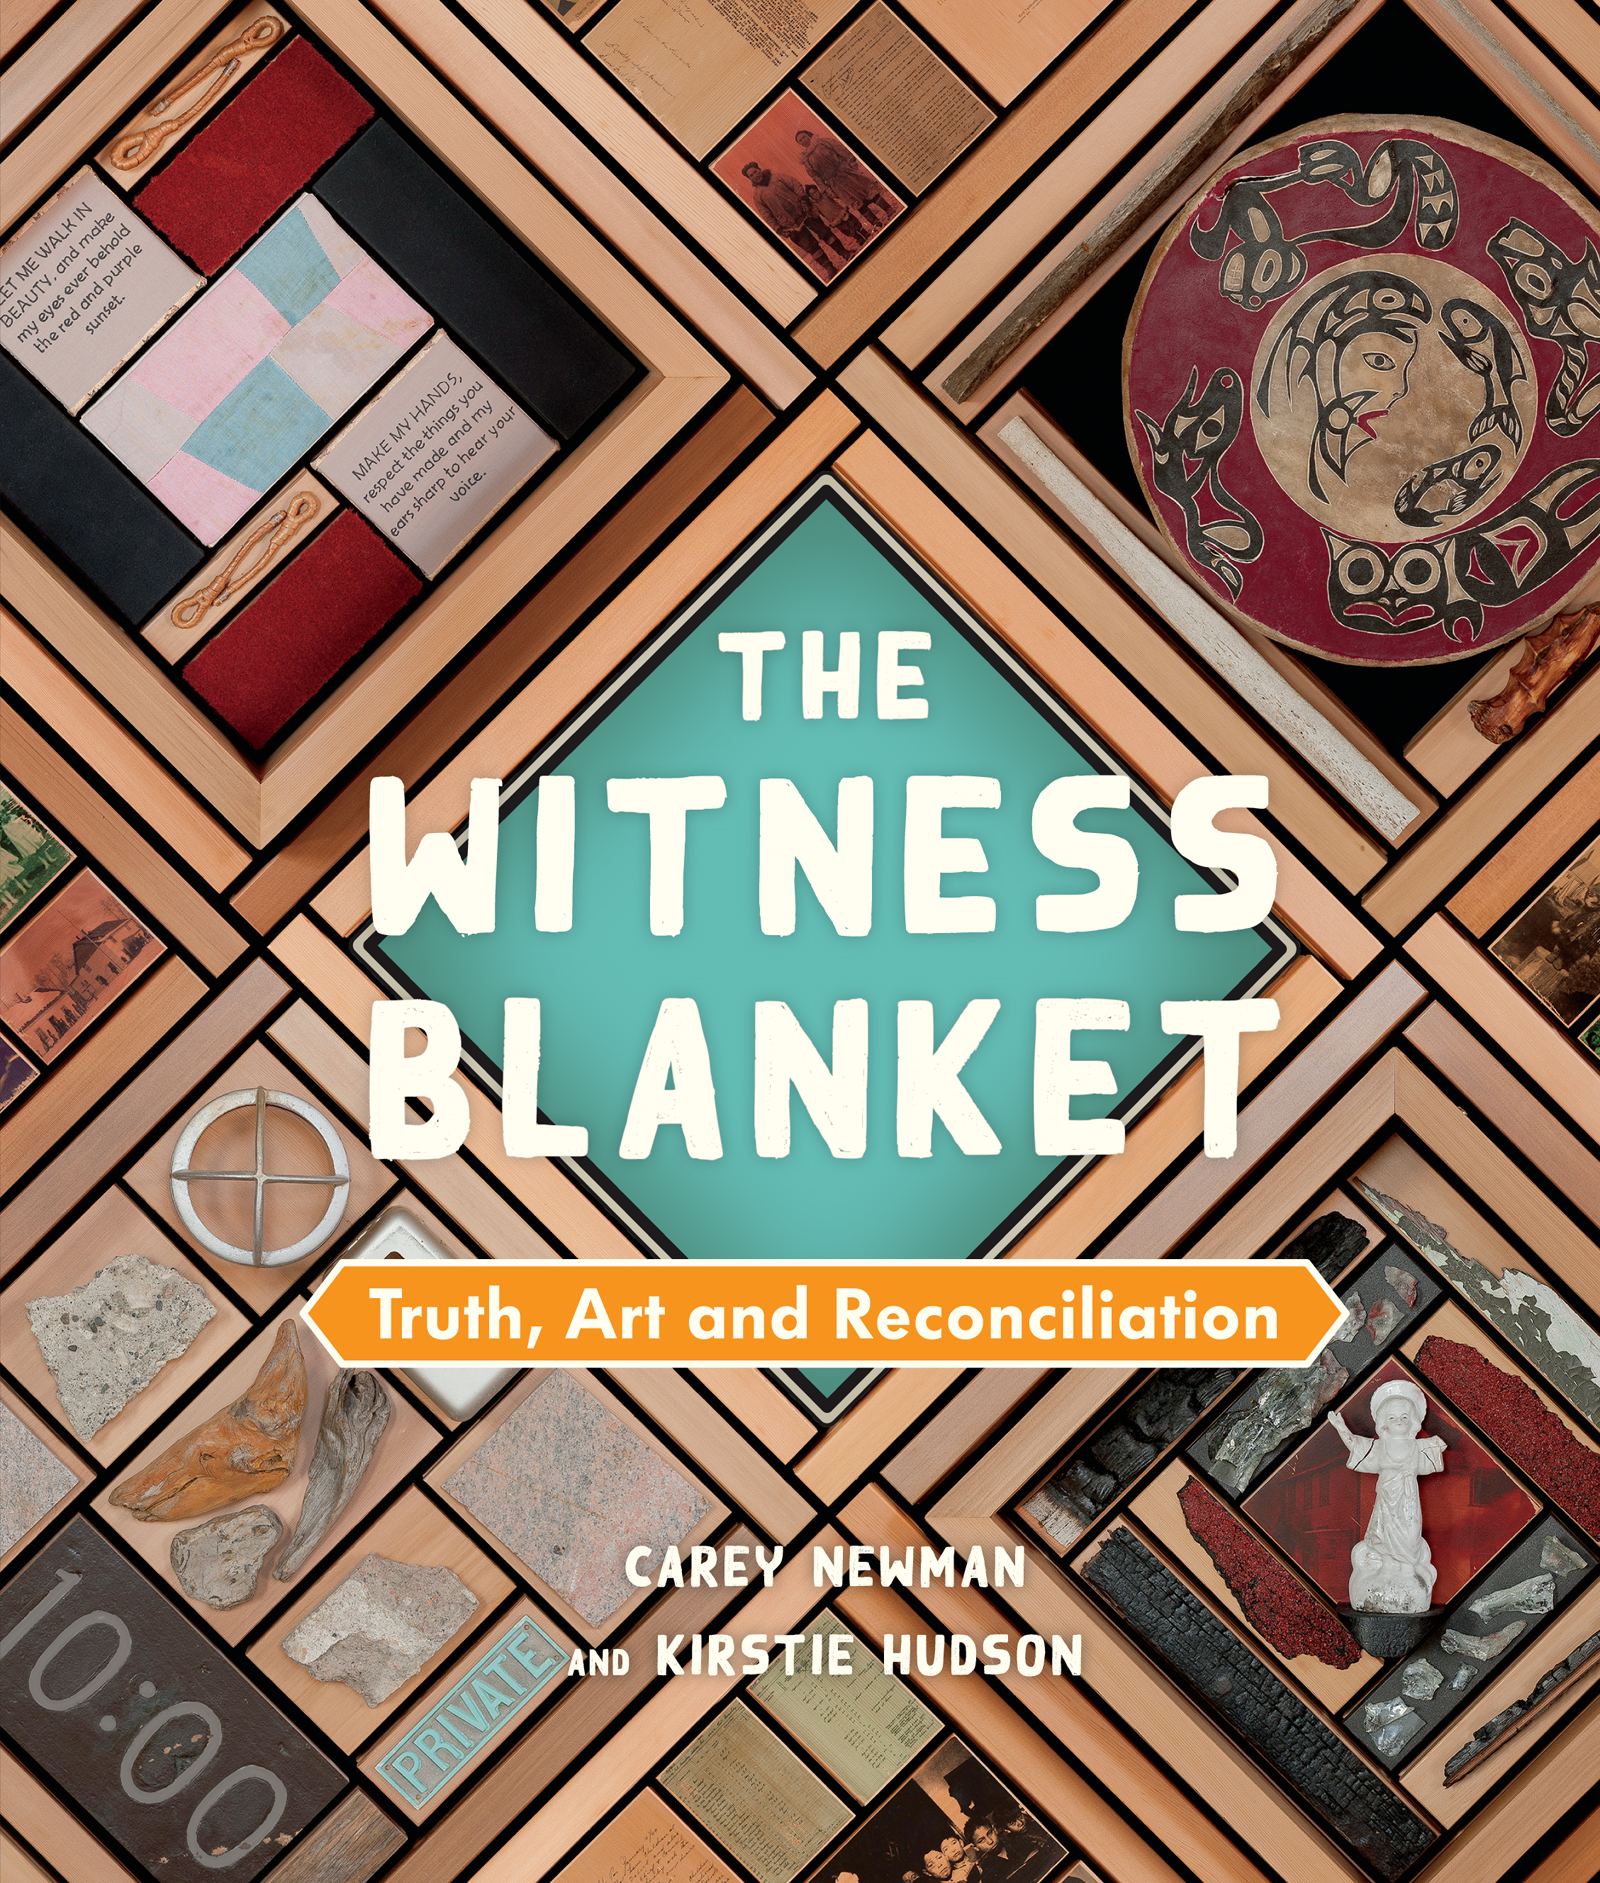 Witness Blanket, The